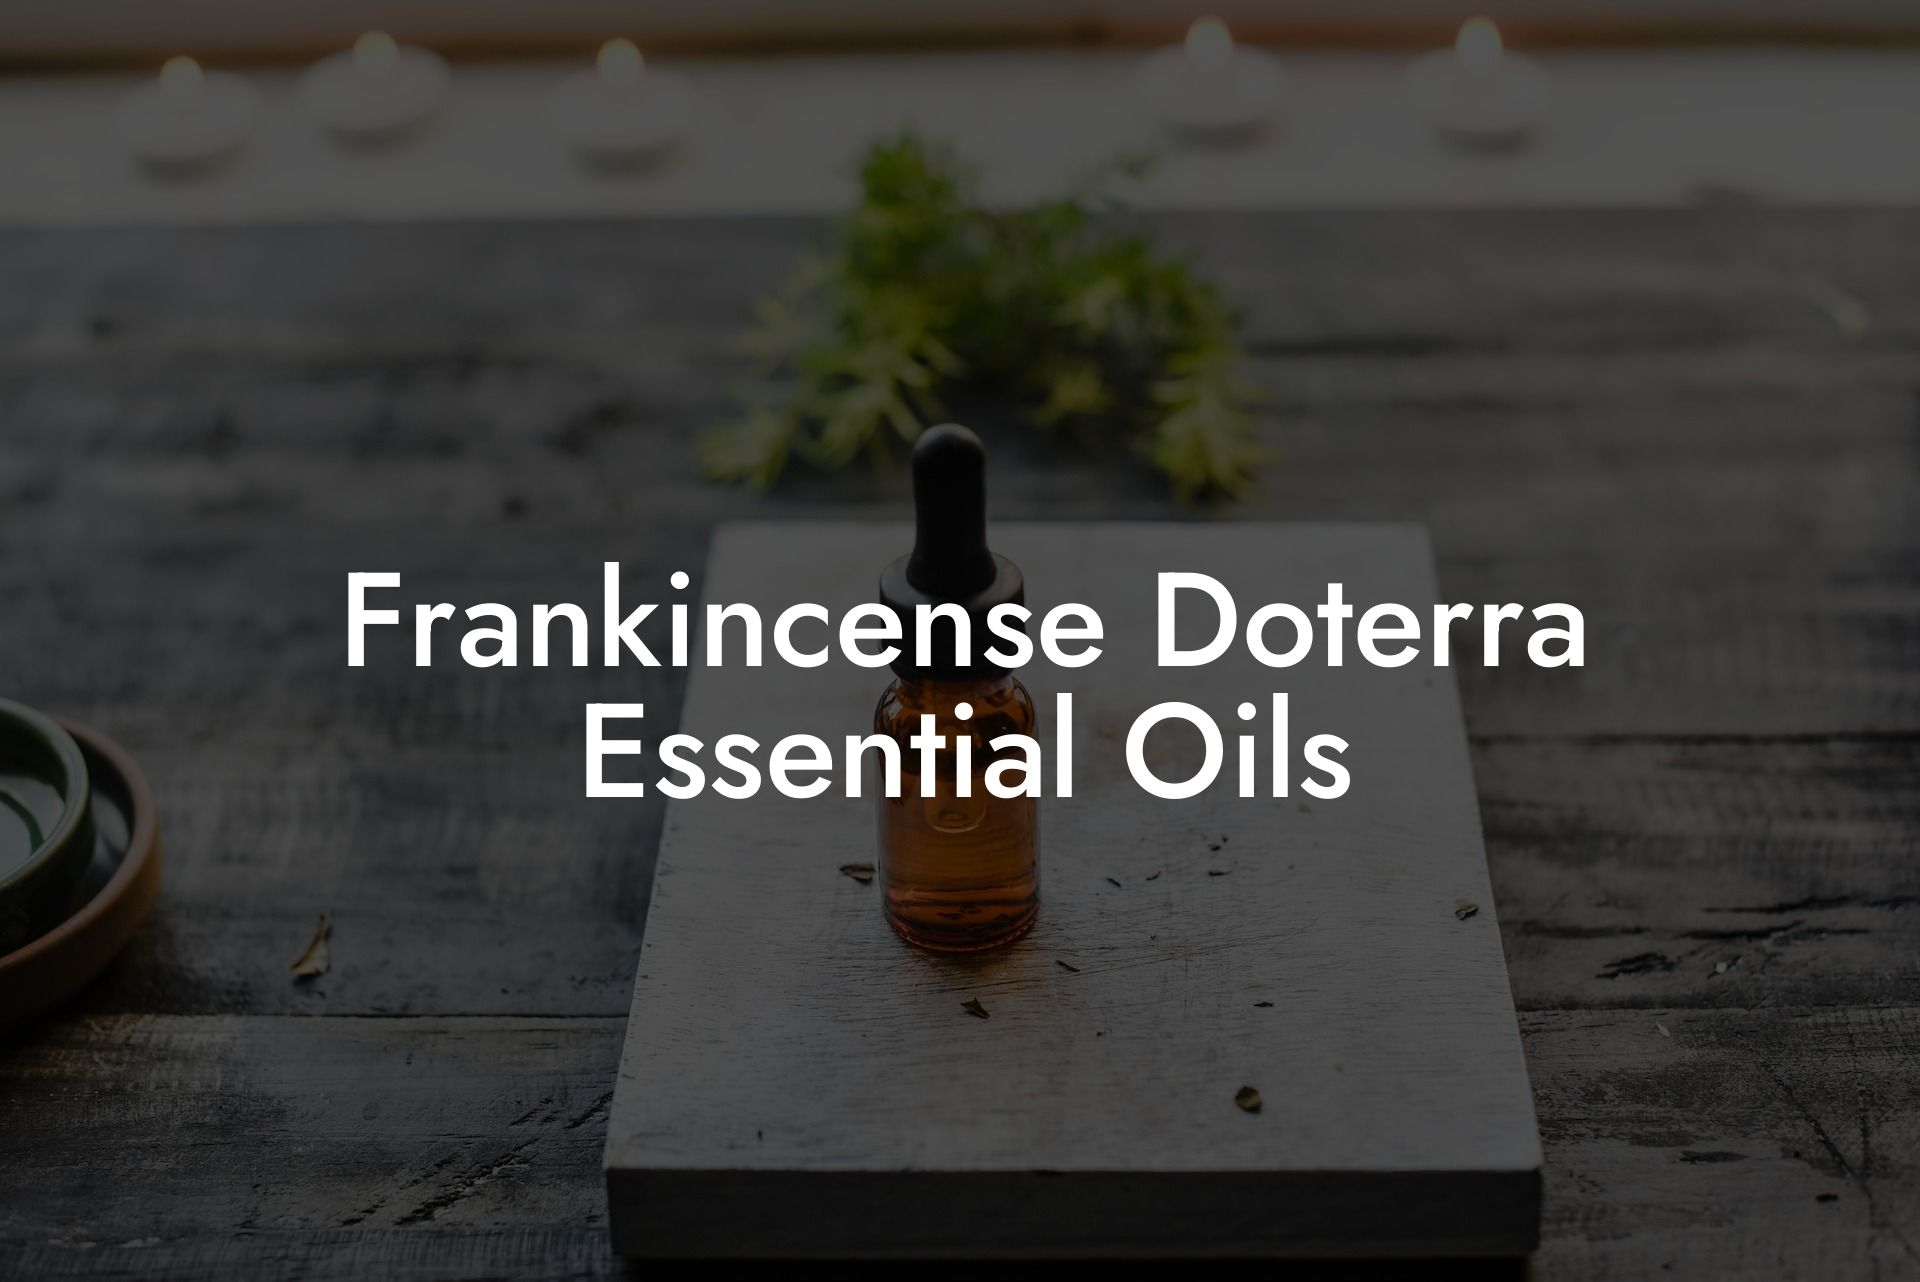 Frankincense Doterra Essential Oils